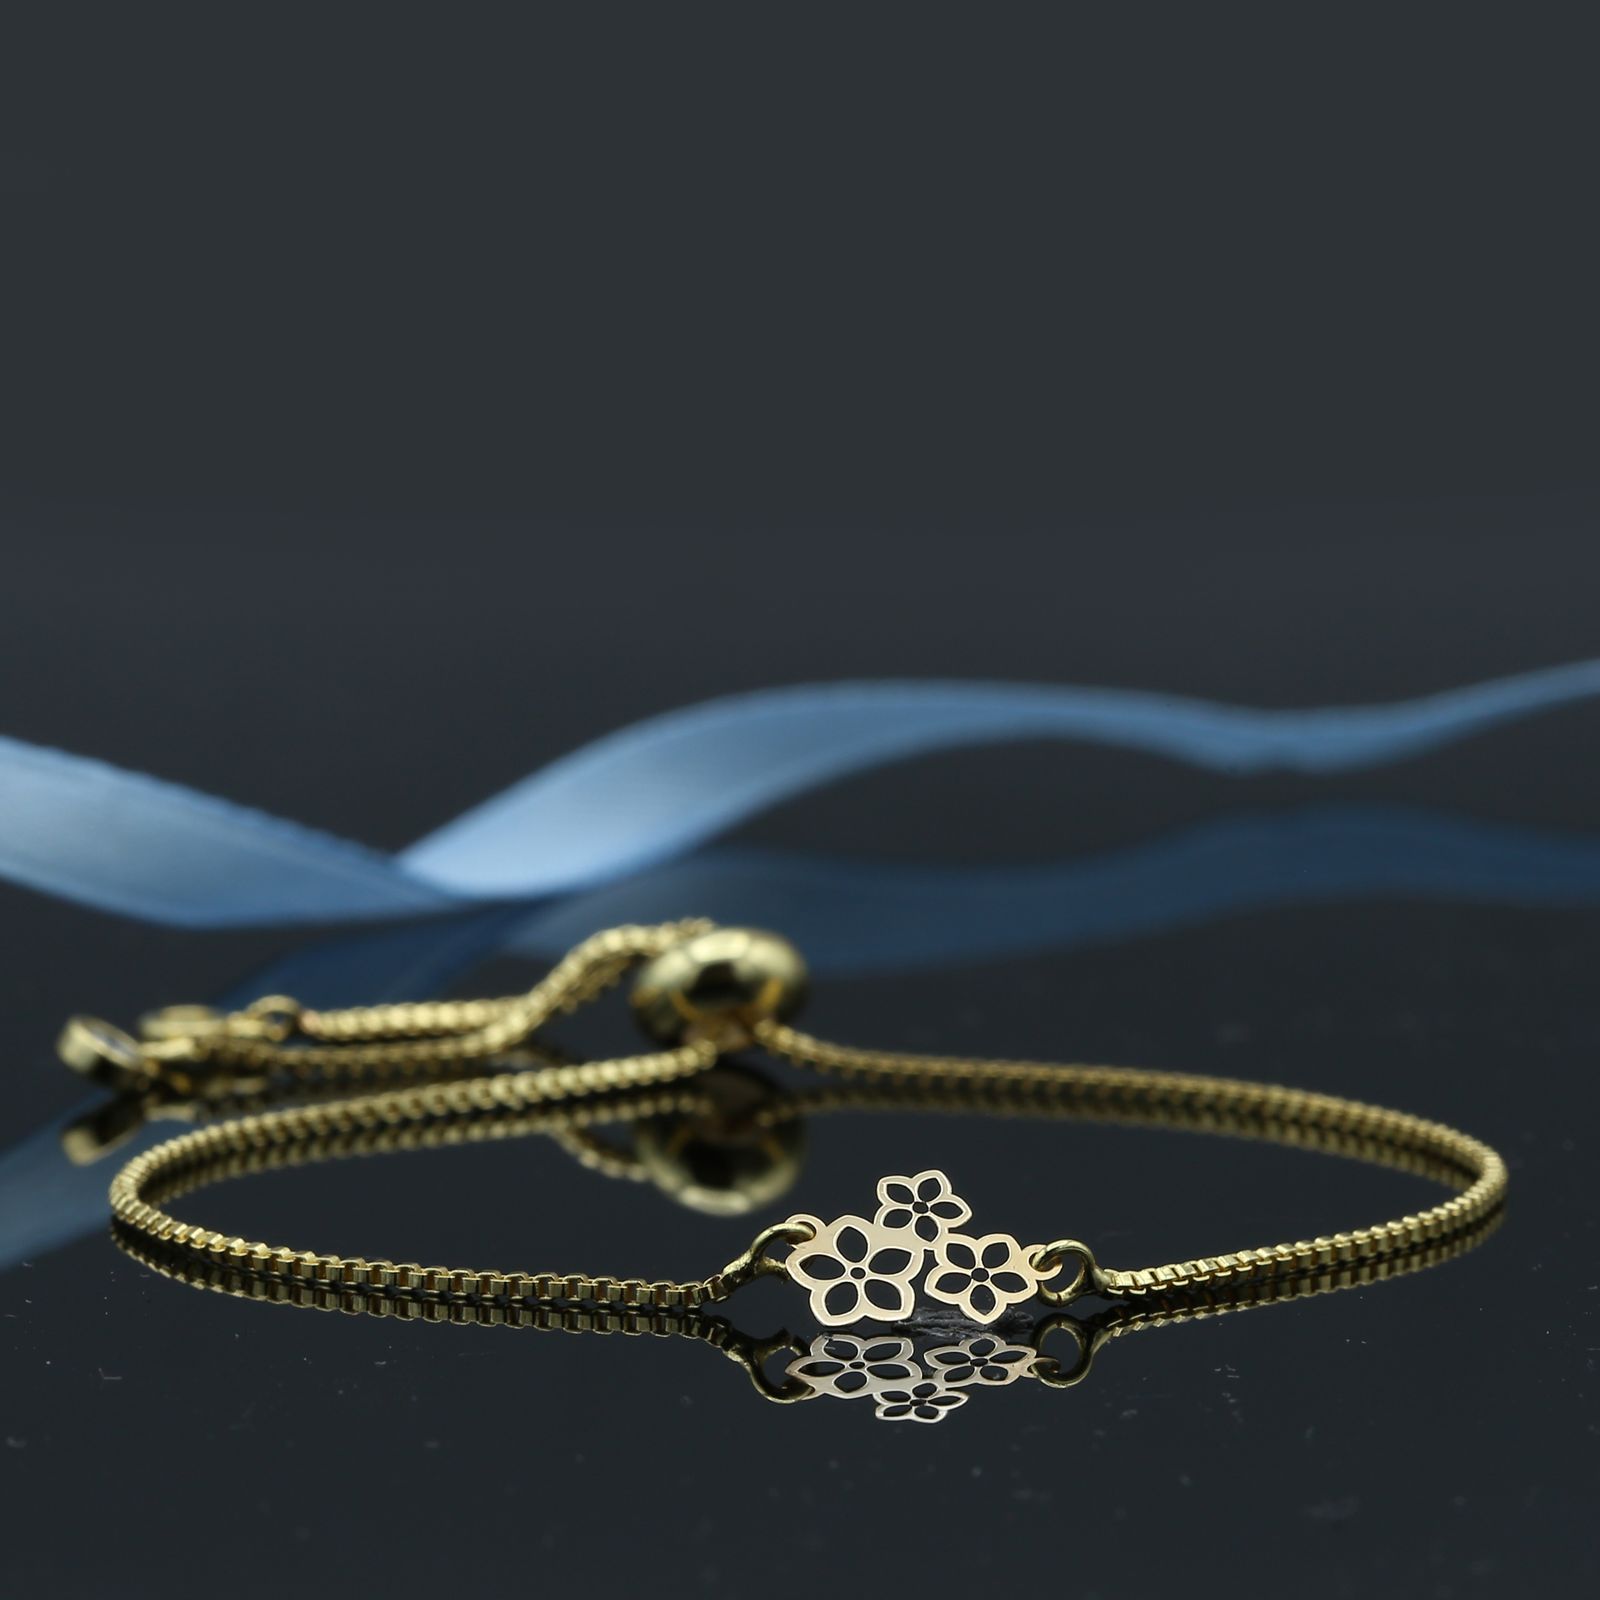 دستبند طلا 18 عیار زنانه آمانژ طرح گل کد 1017D8966 -  - 2